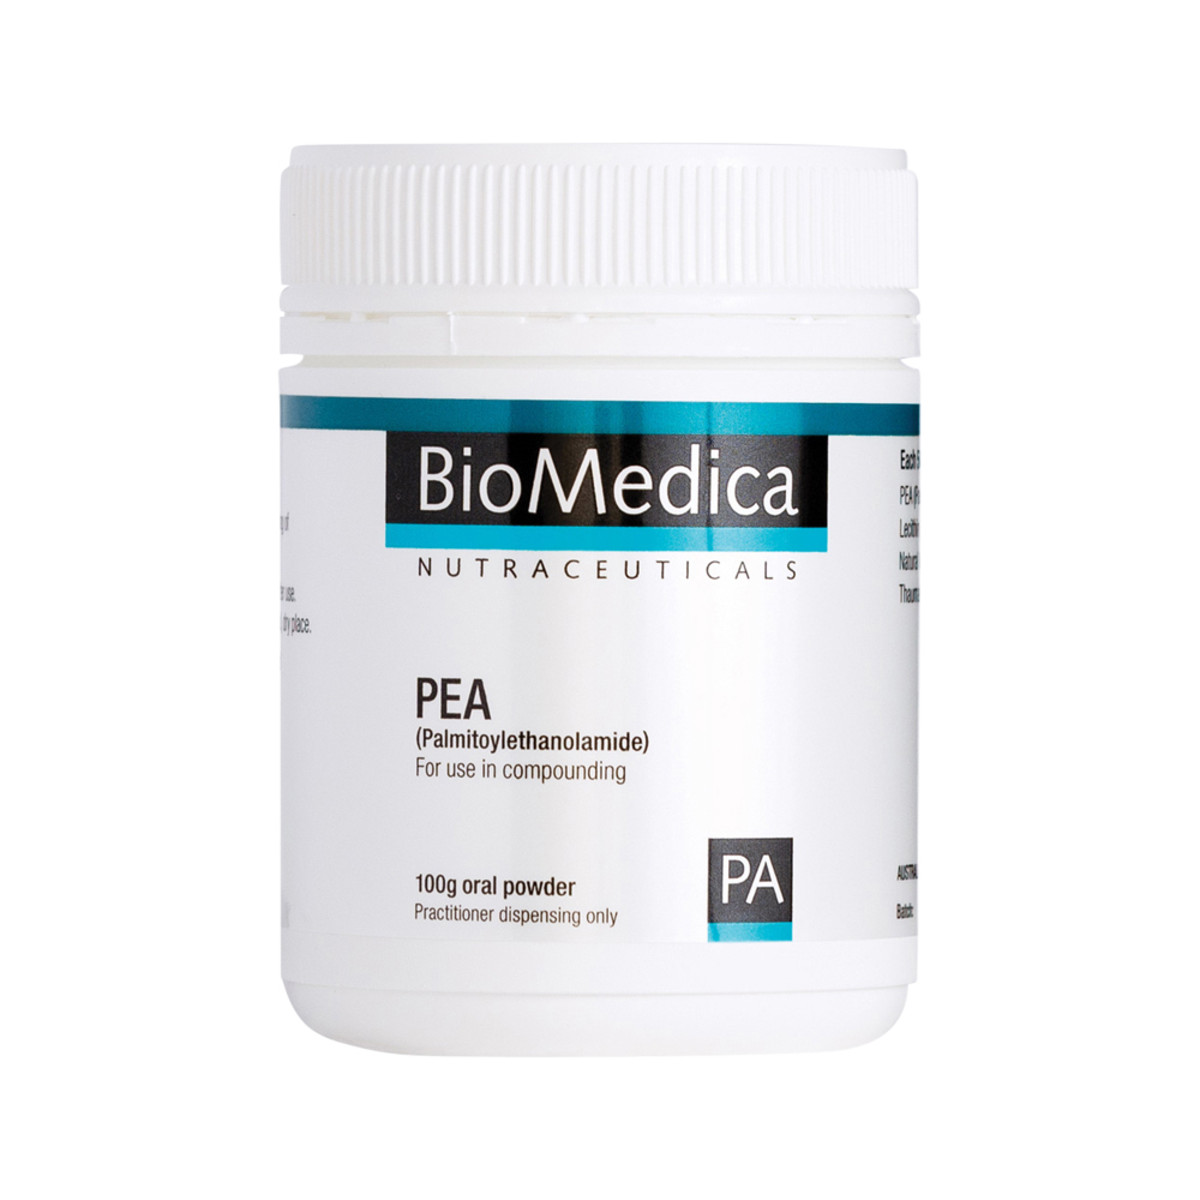 BIOMEDICA - PEA (Palmitoylethanolamide)